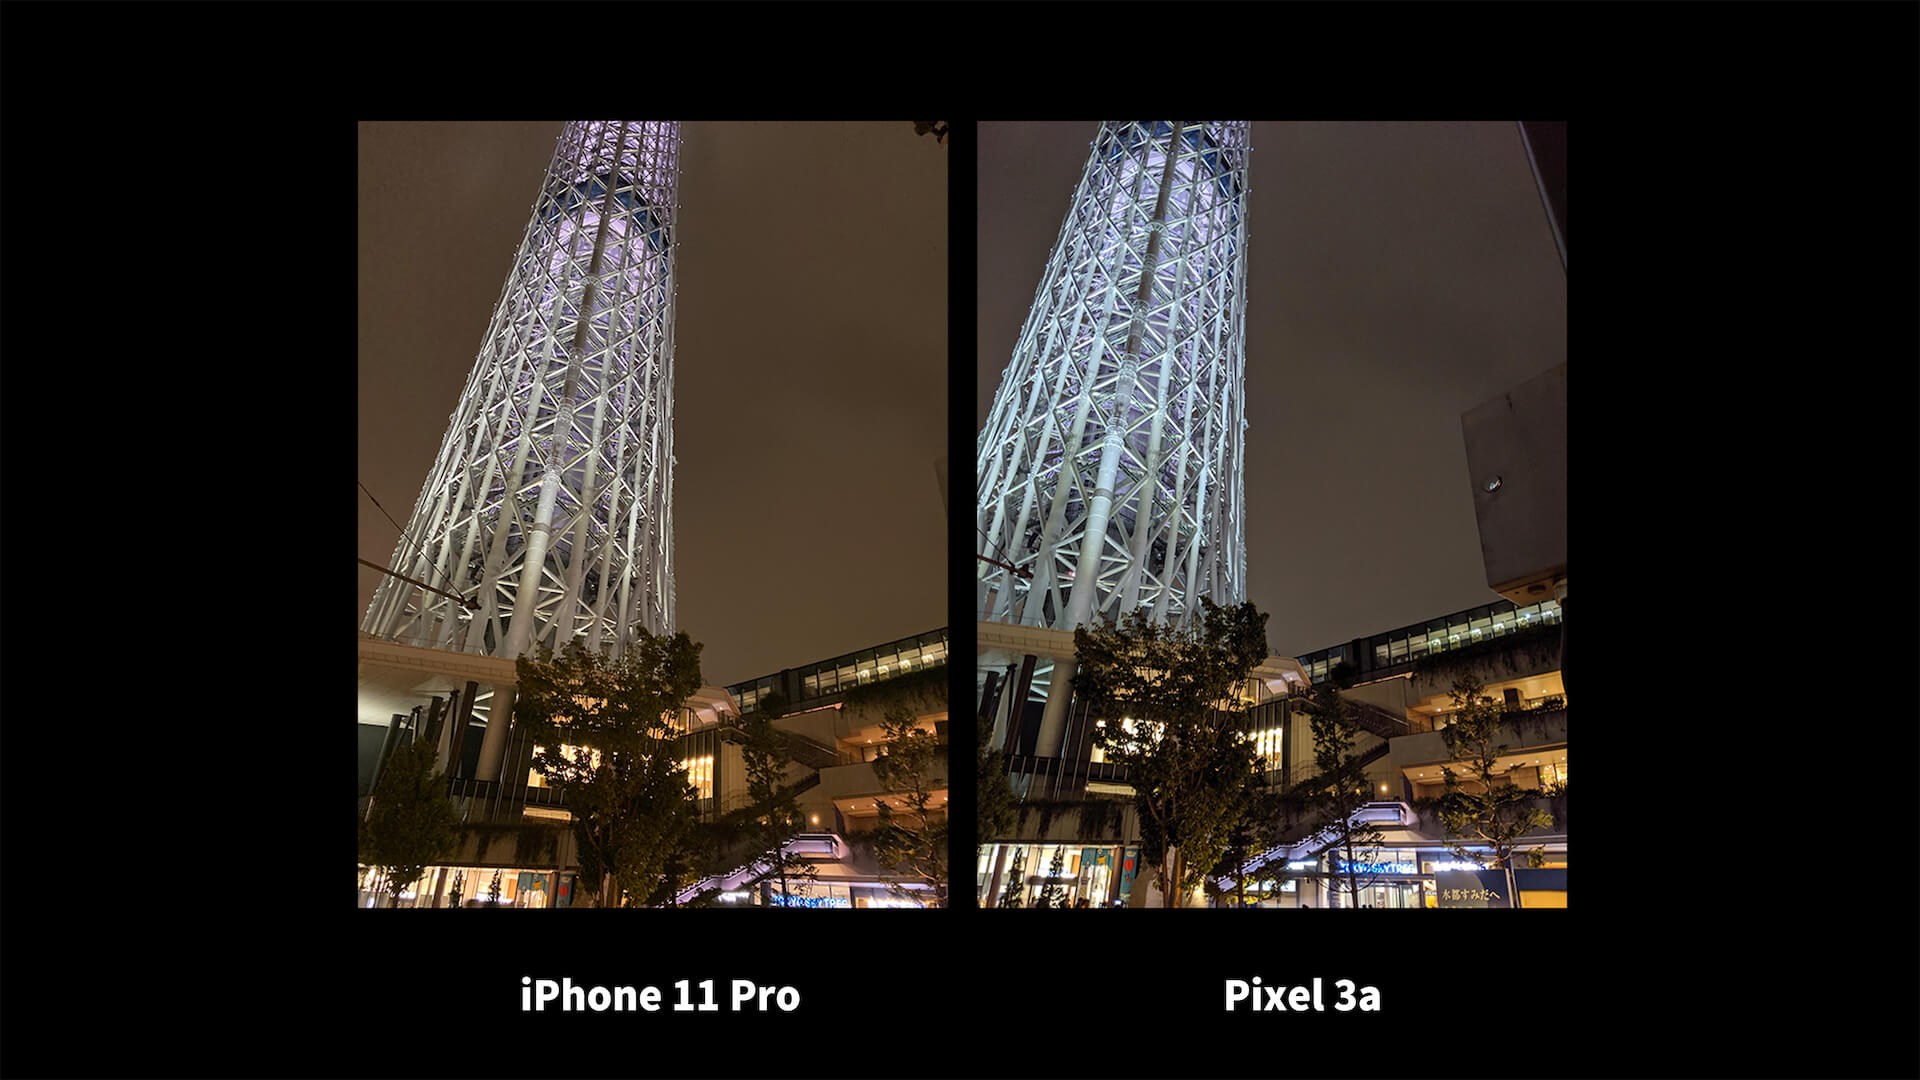 iPhone 11 Pro Pixel 3a ナイトモード 比較 スカイツリーとソラマチ